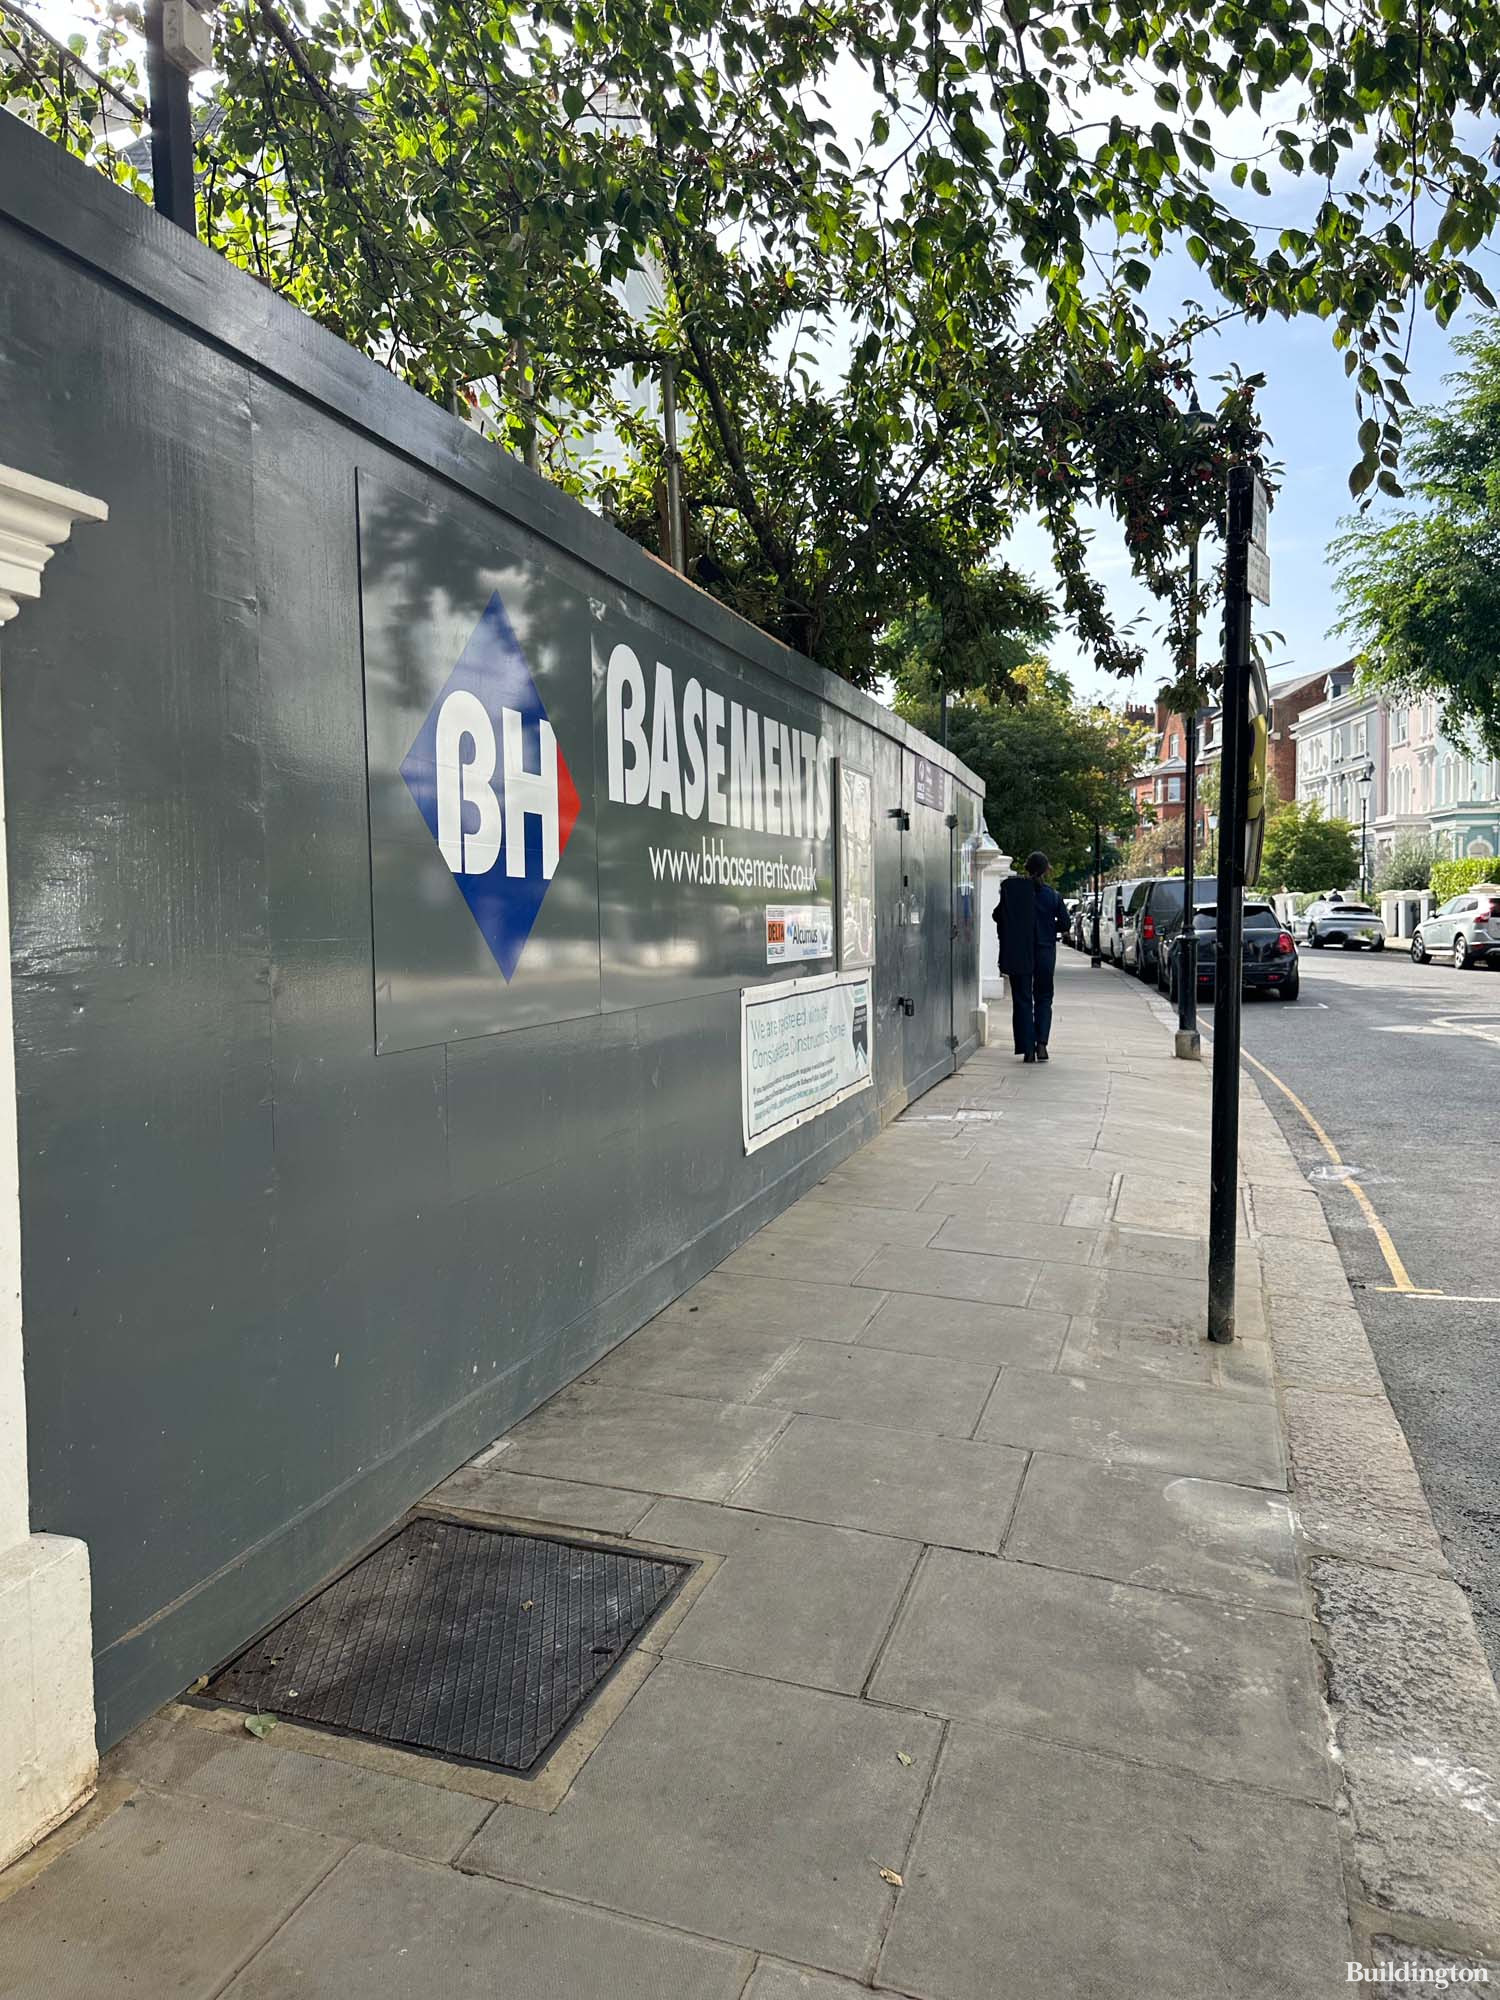 BH Basement at 103 Elgin Crescent development in Notting Hill, London W11.